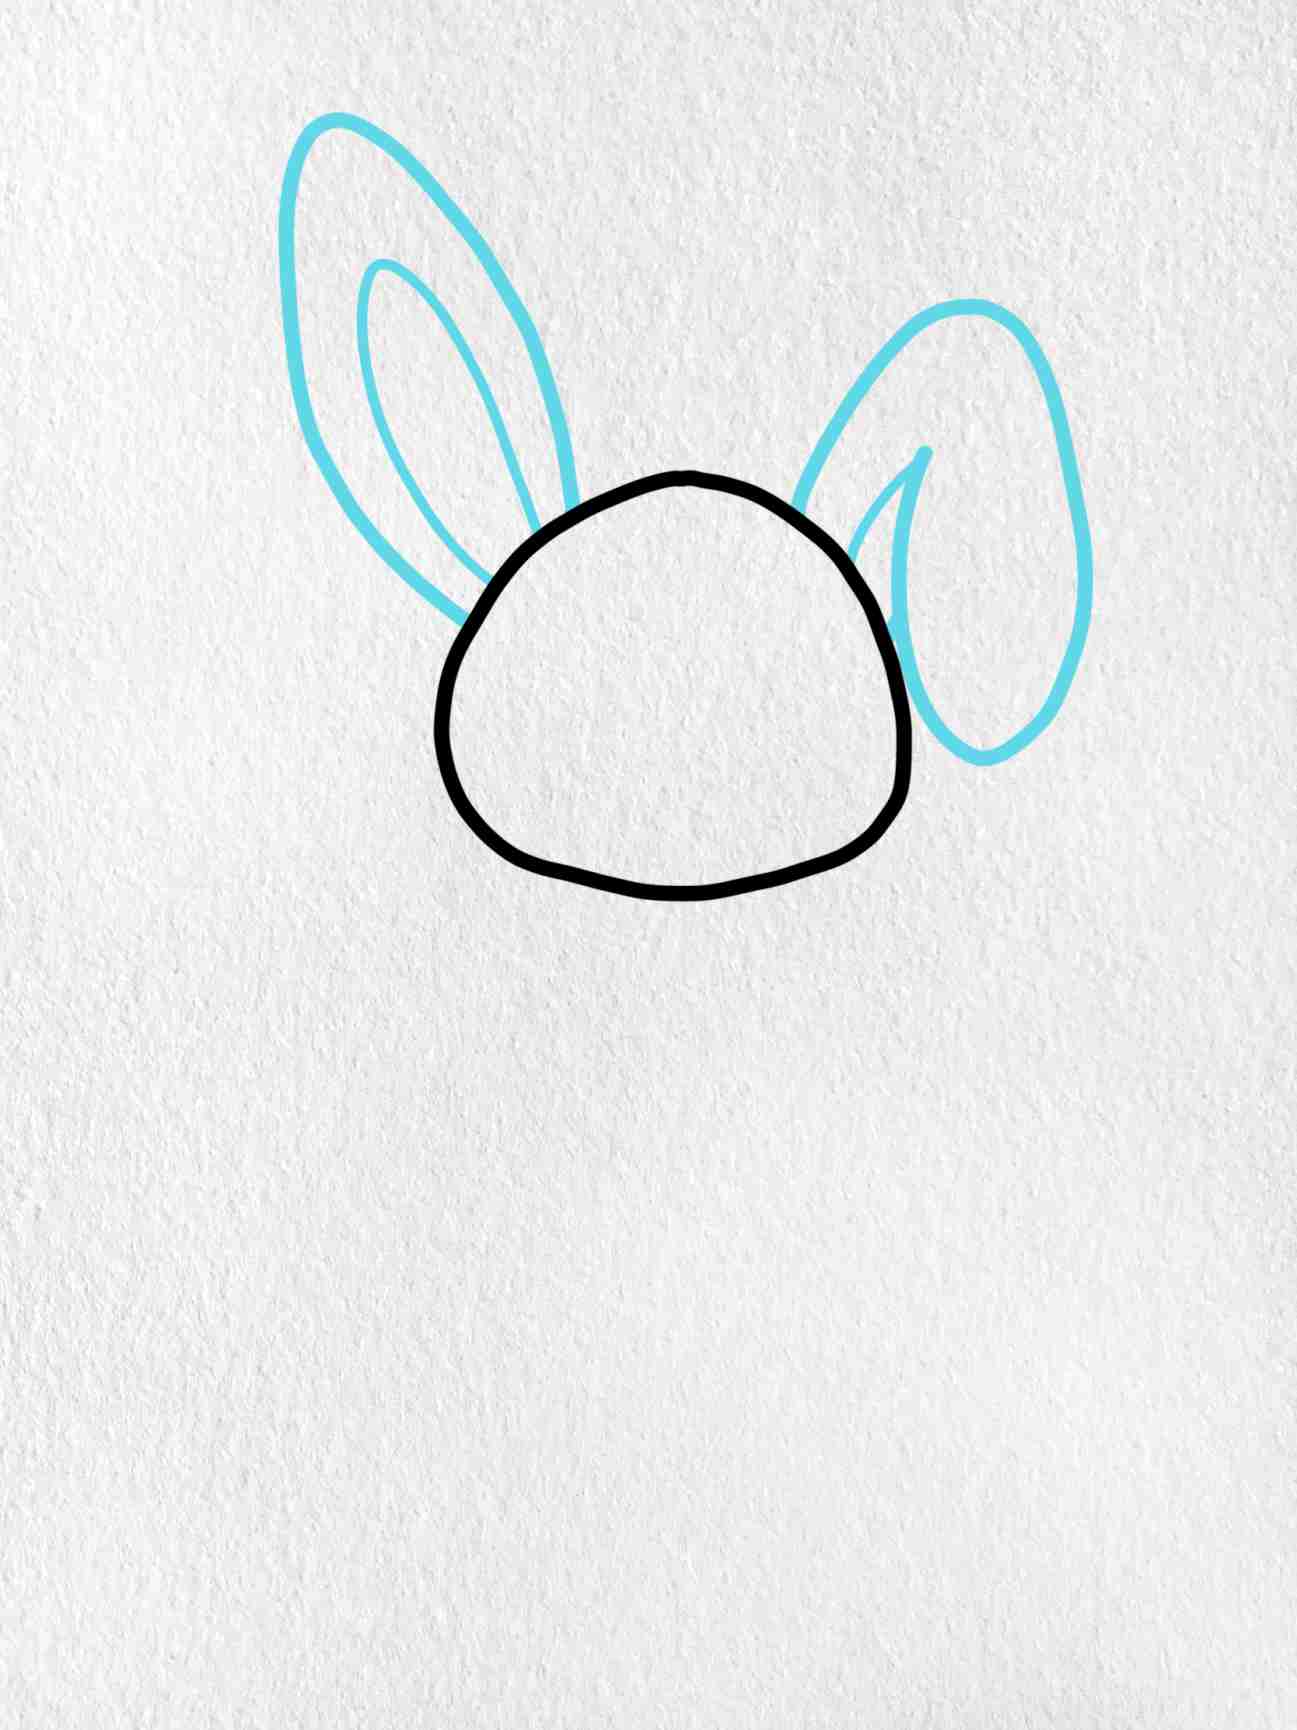 Bunny Face Drawing Beautiful Image